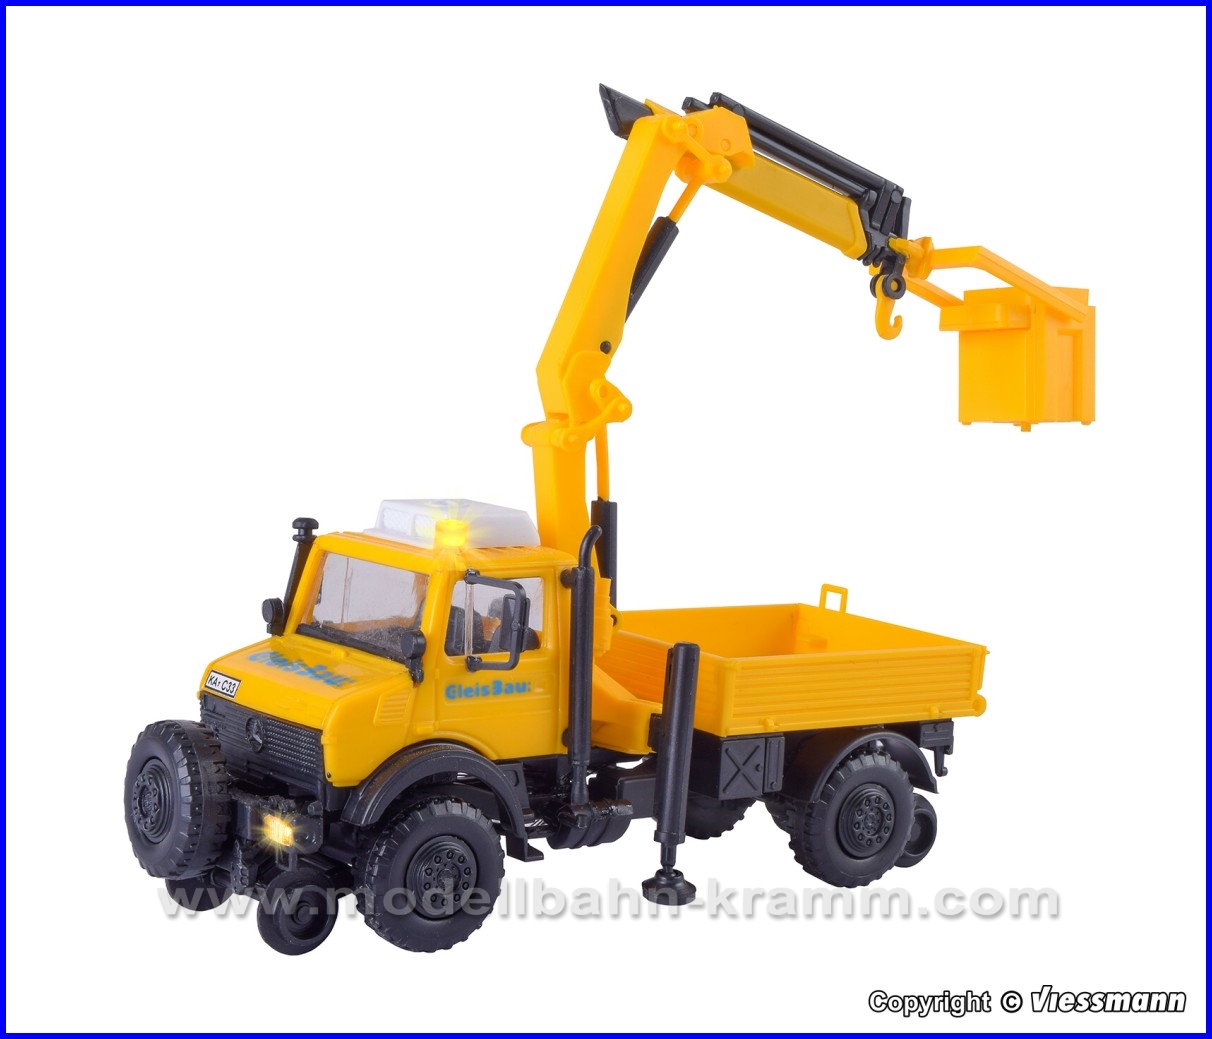 Kibri 14991, EAN 4026602149912: H0 Two-way UNIMOG GleisBau with loading crane